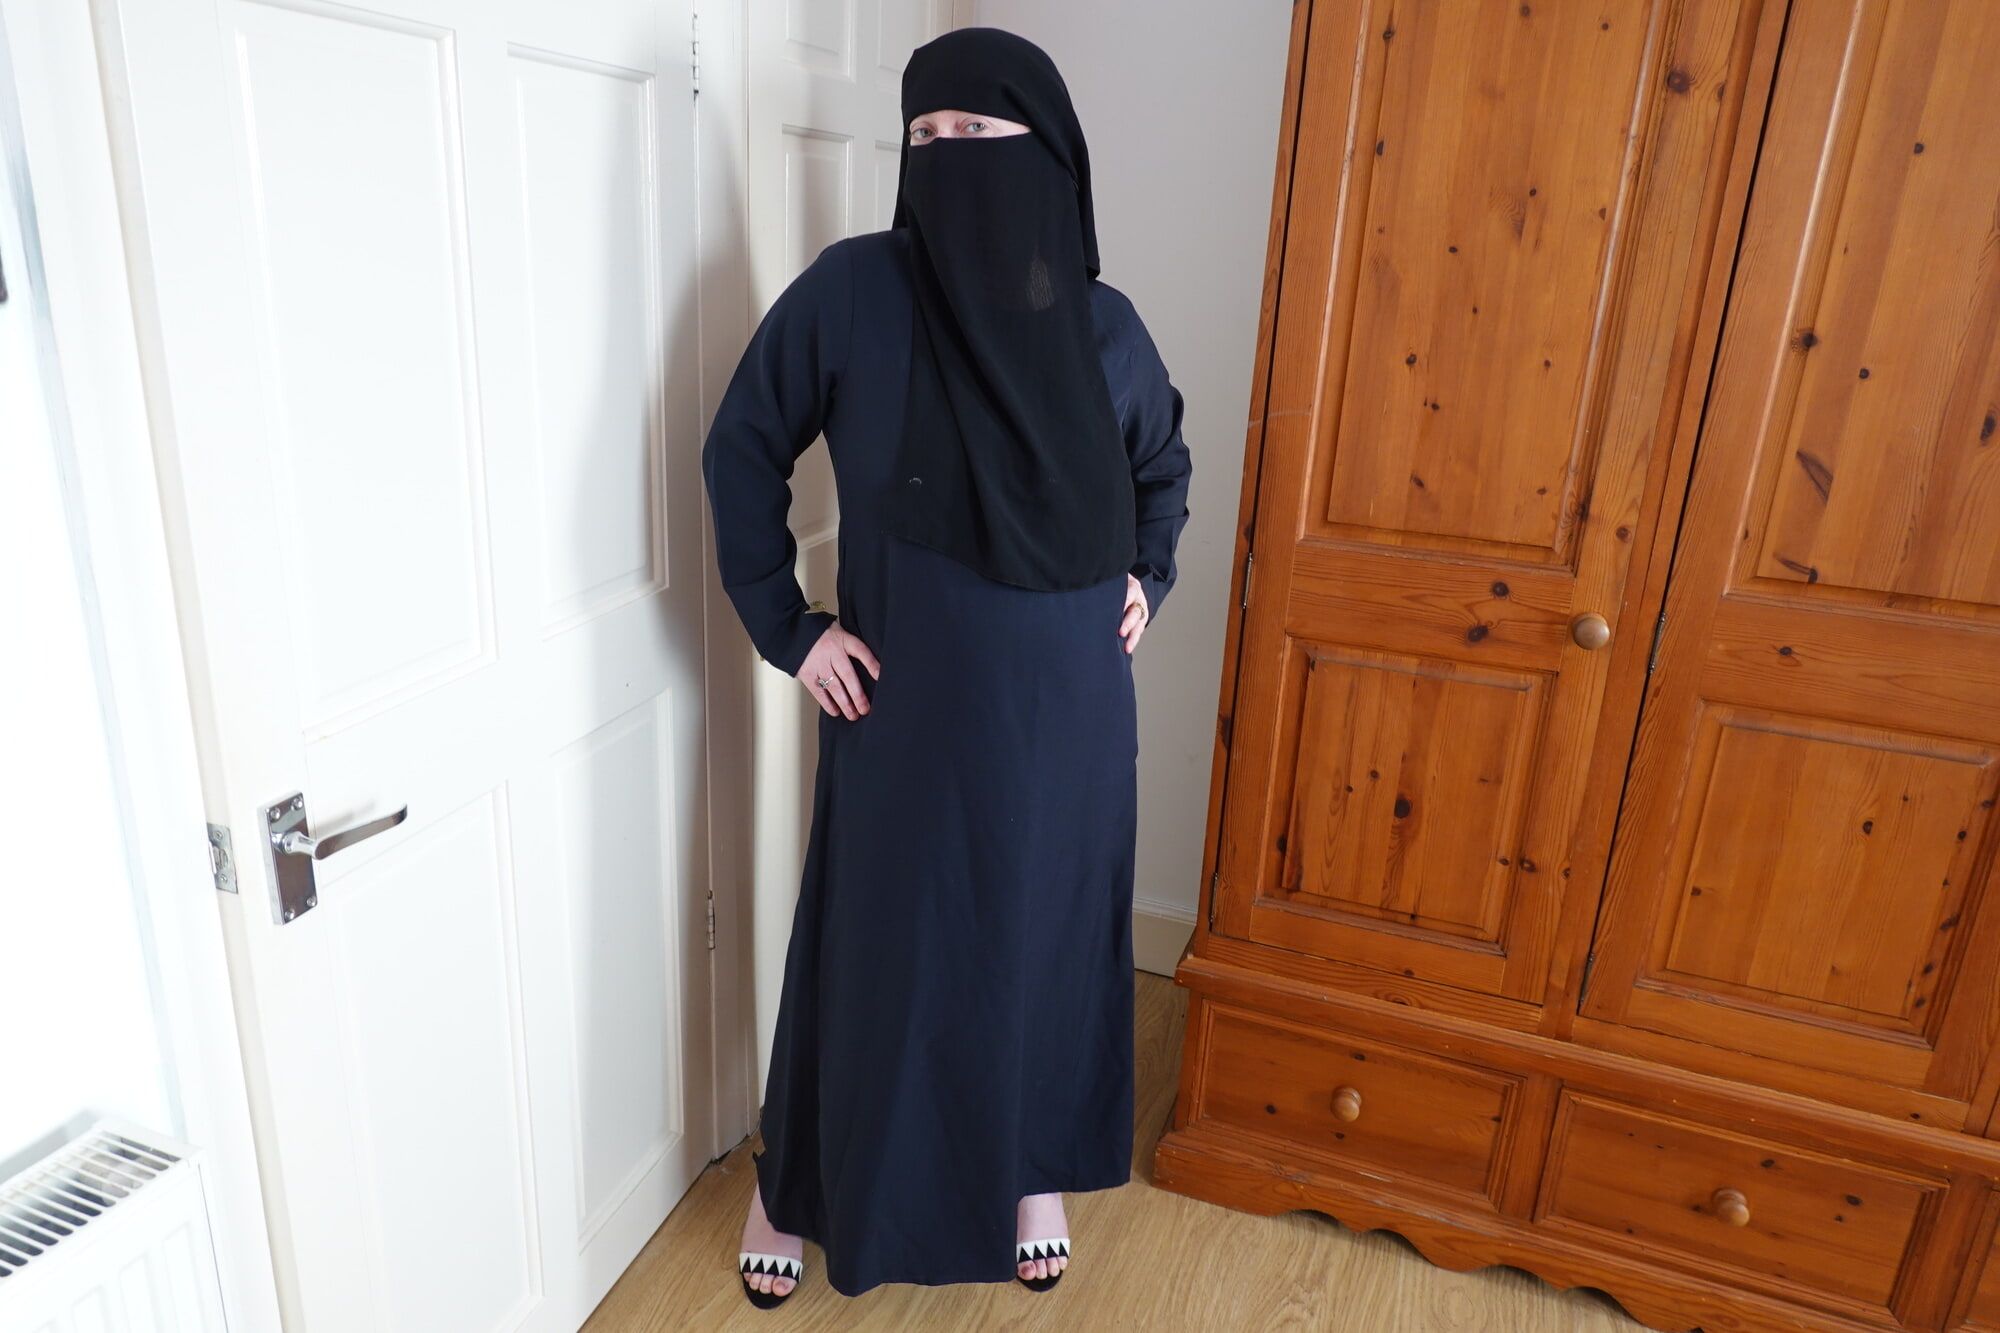 Pale Skin MILF in Burqa and Niqab and High heels #2